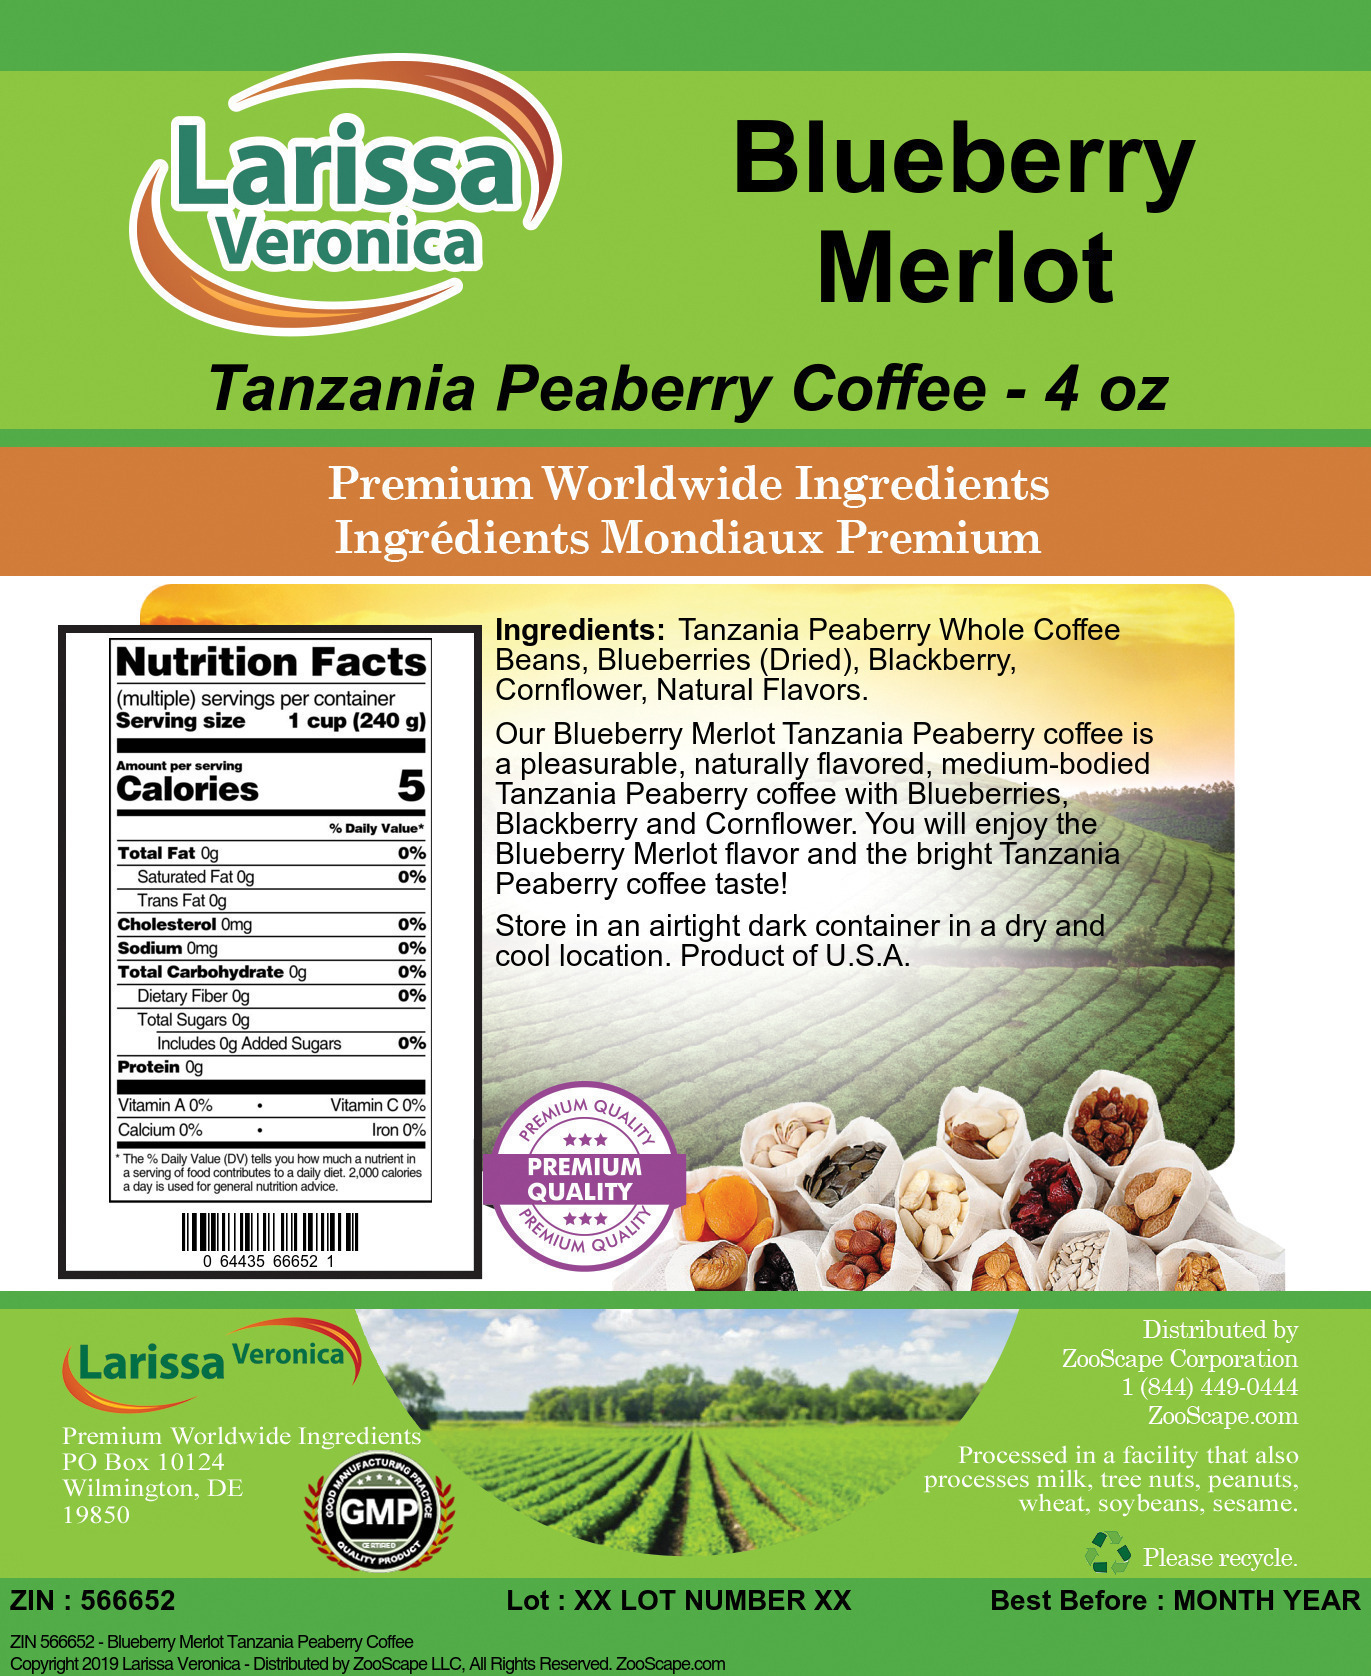 Blueberry Merlot Tanzania Peaberry Coffee - Label